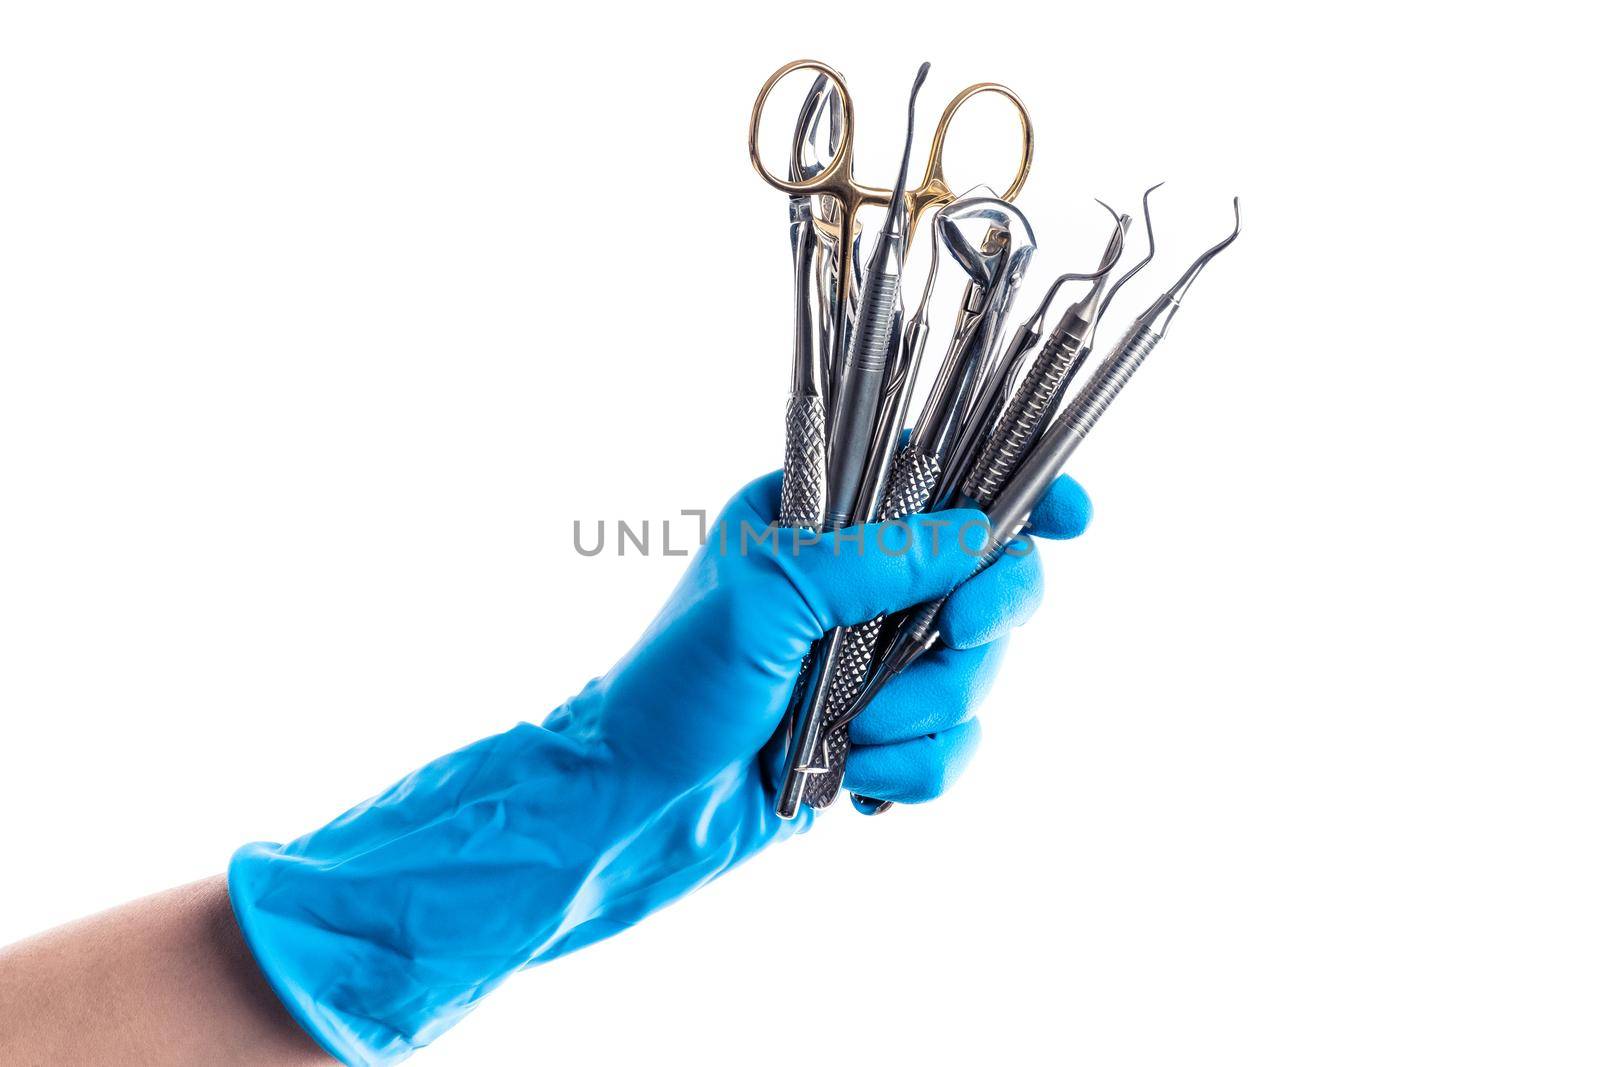 Hands in blue gloves holding dental equipment isolated by GekaSkr